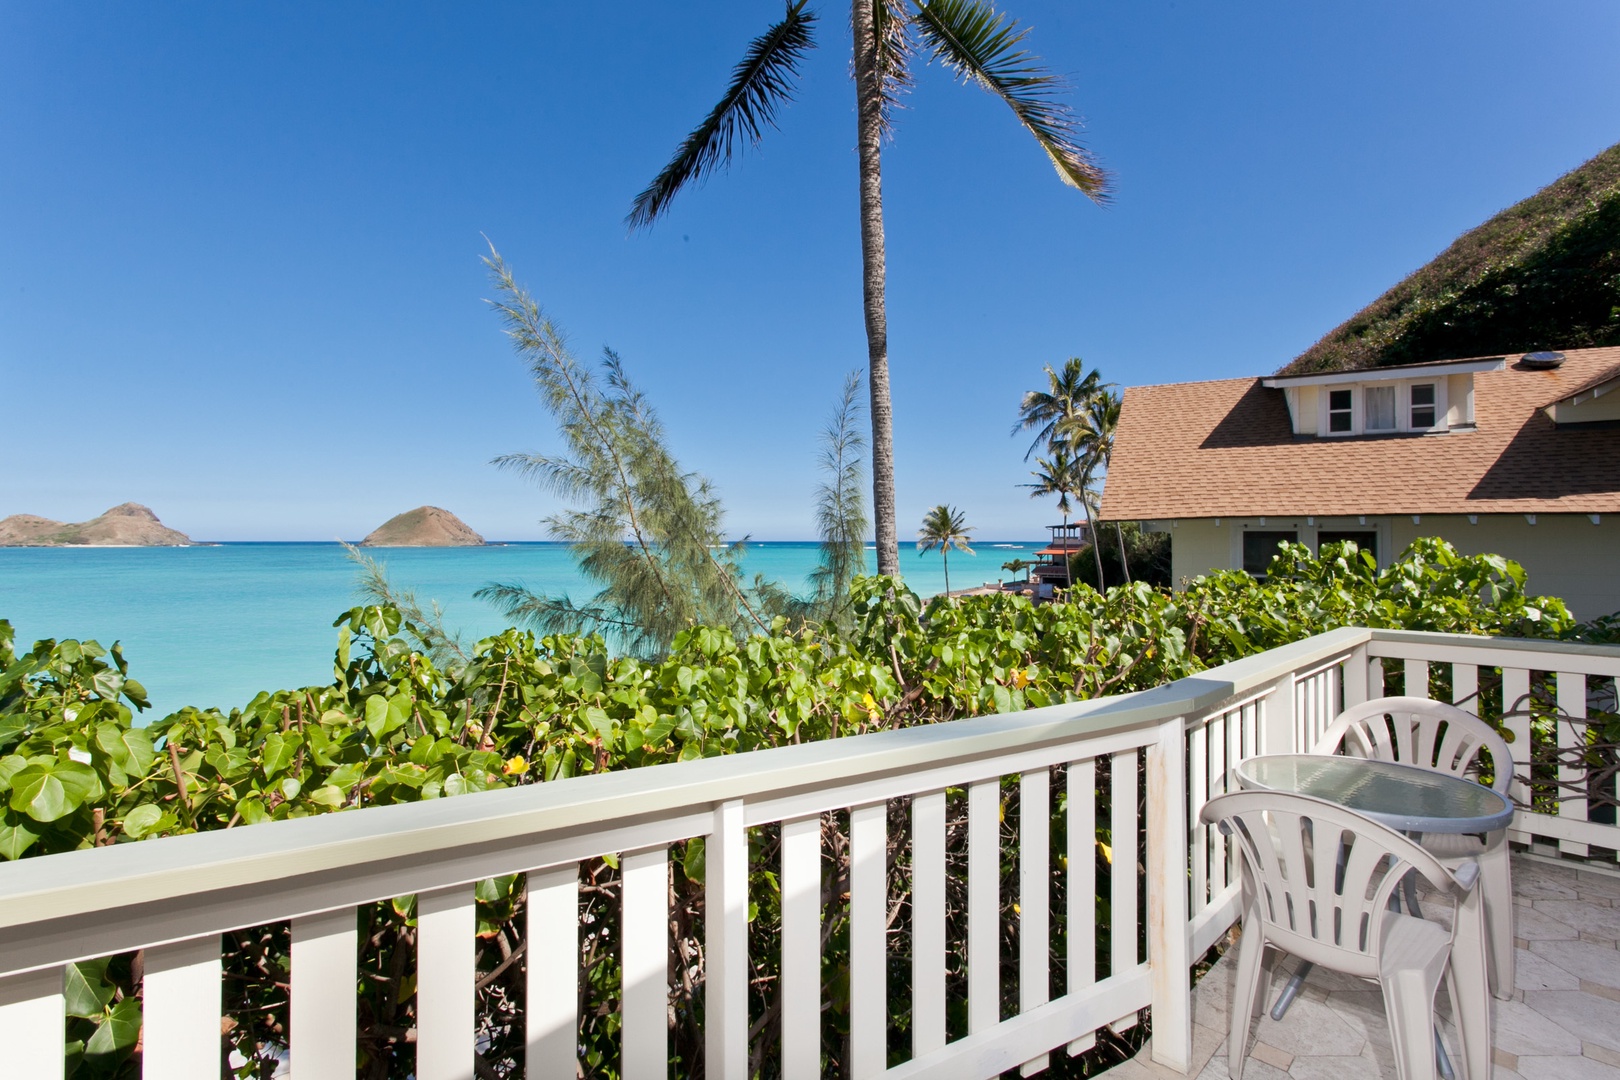 Kailua Vacation Rentals, Hale Kainalu* - Enjoy the island breeze under towering palm trees